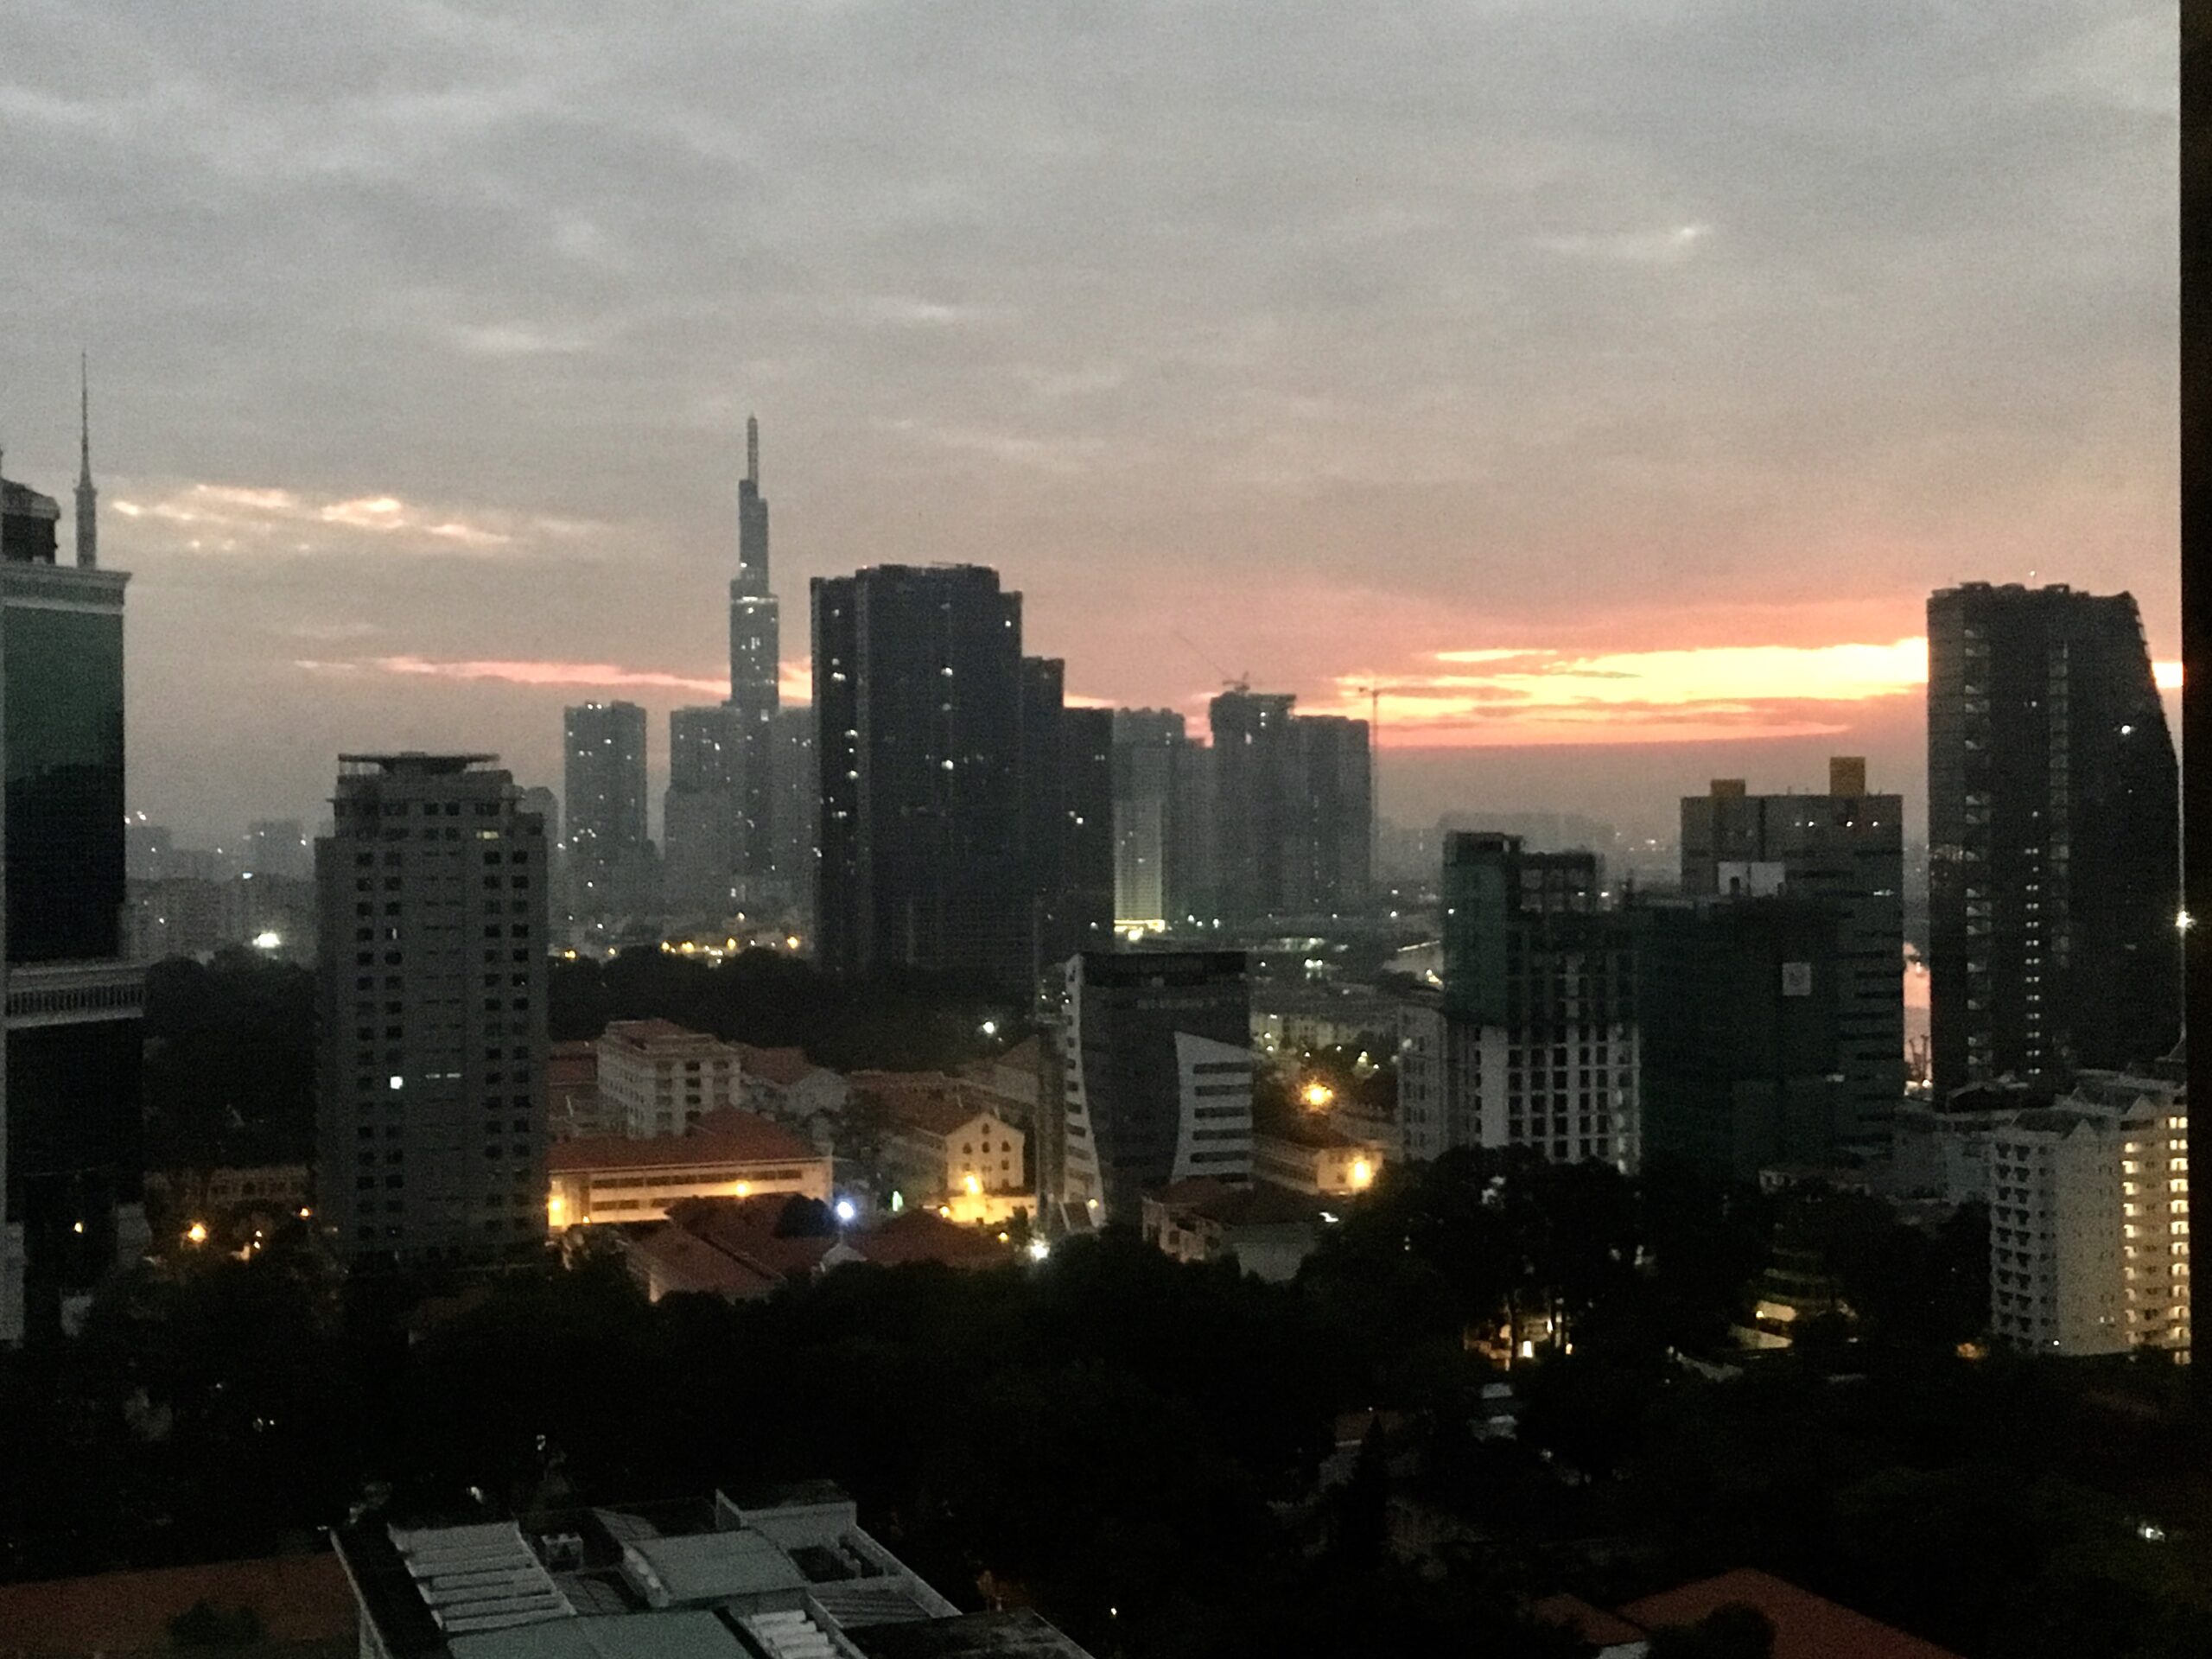 Good Morning From Saigon!